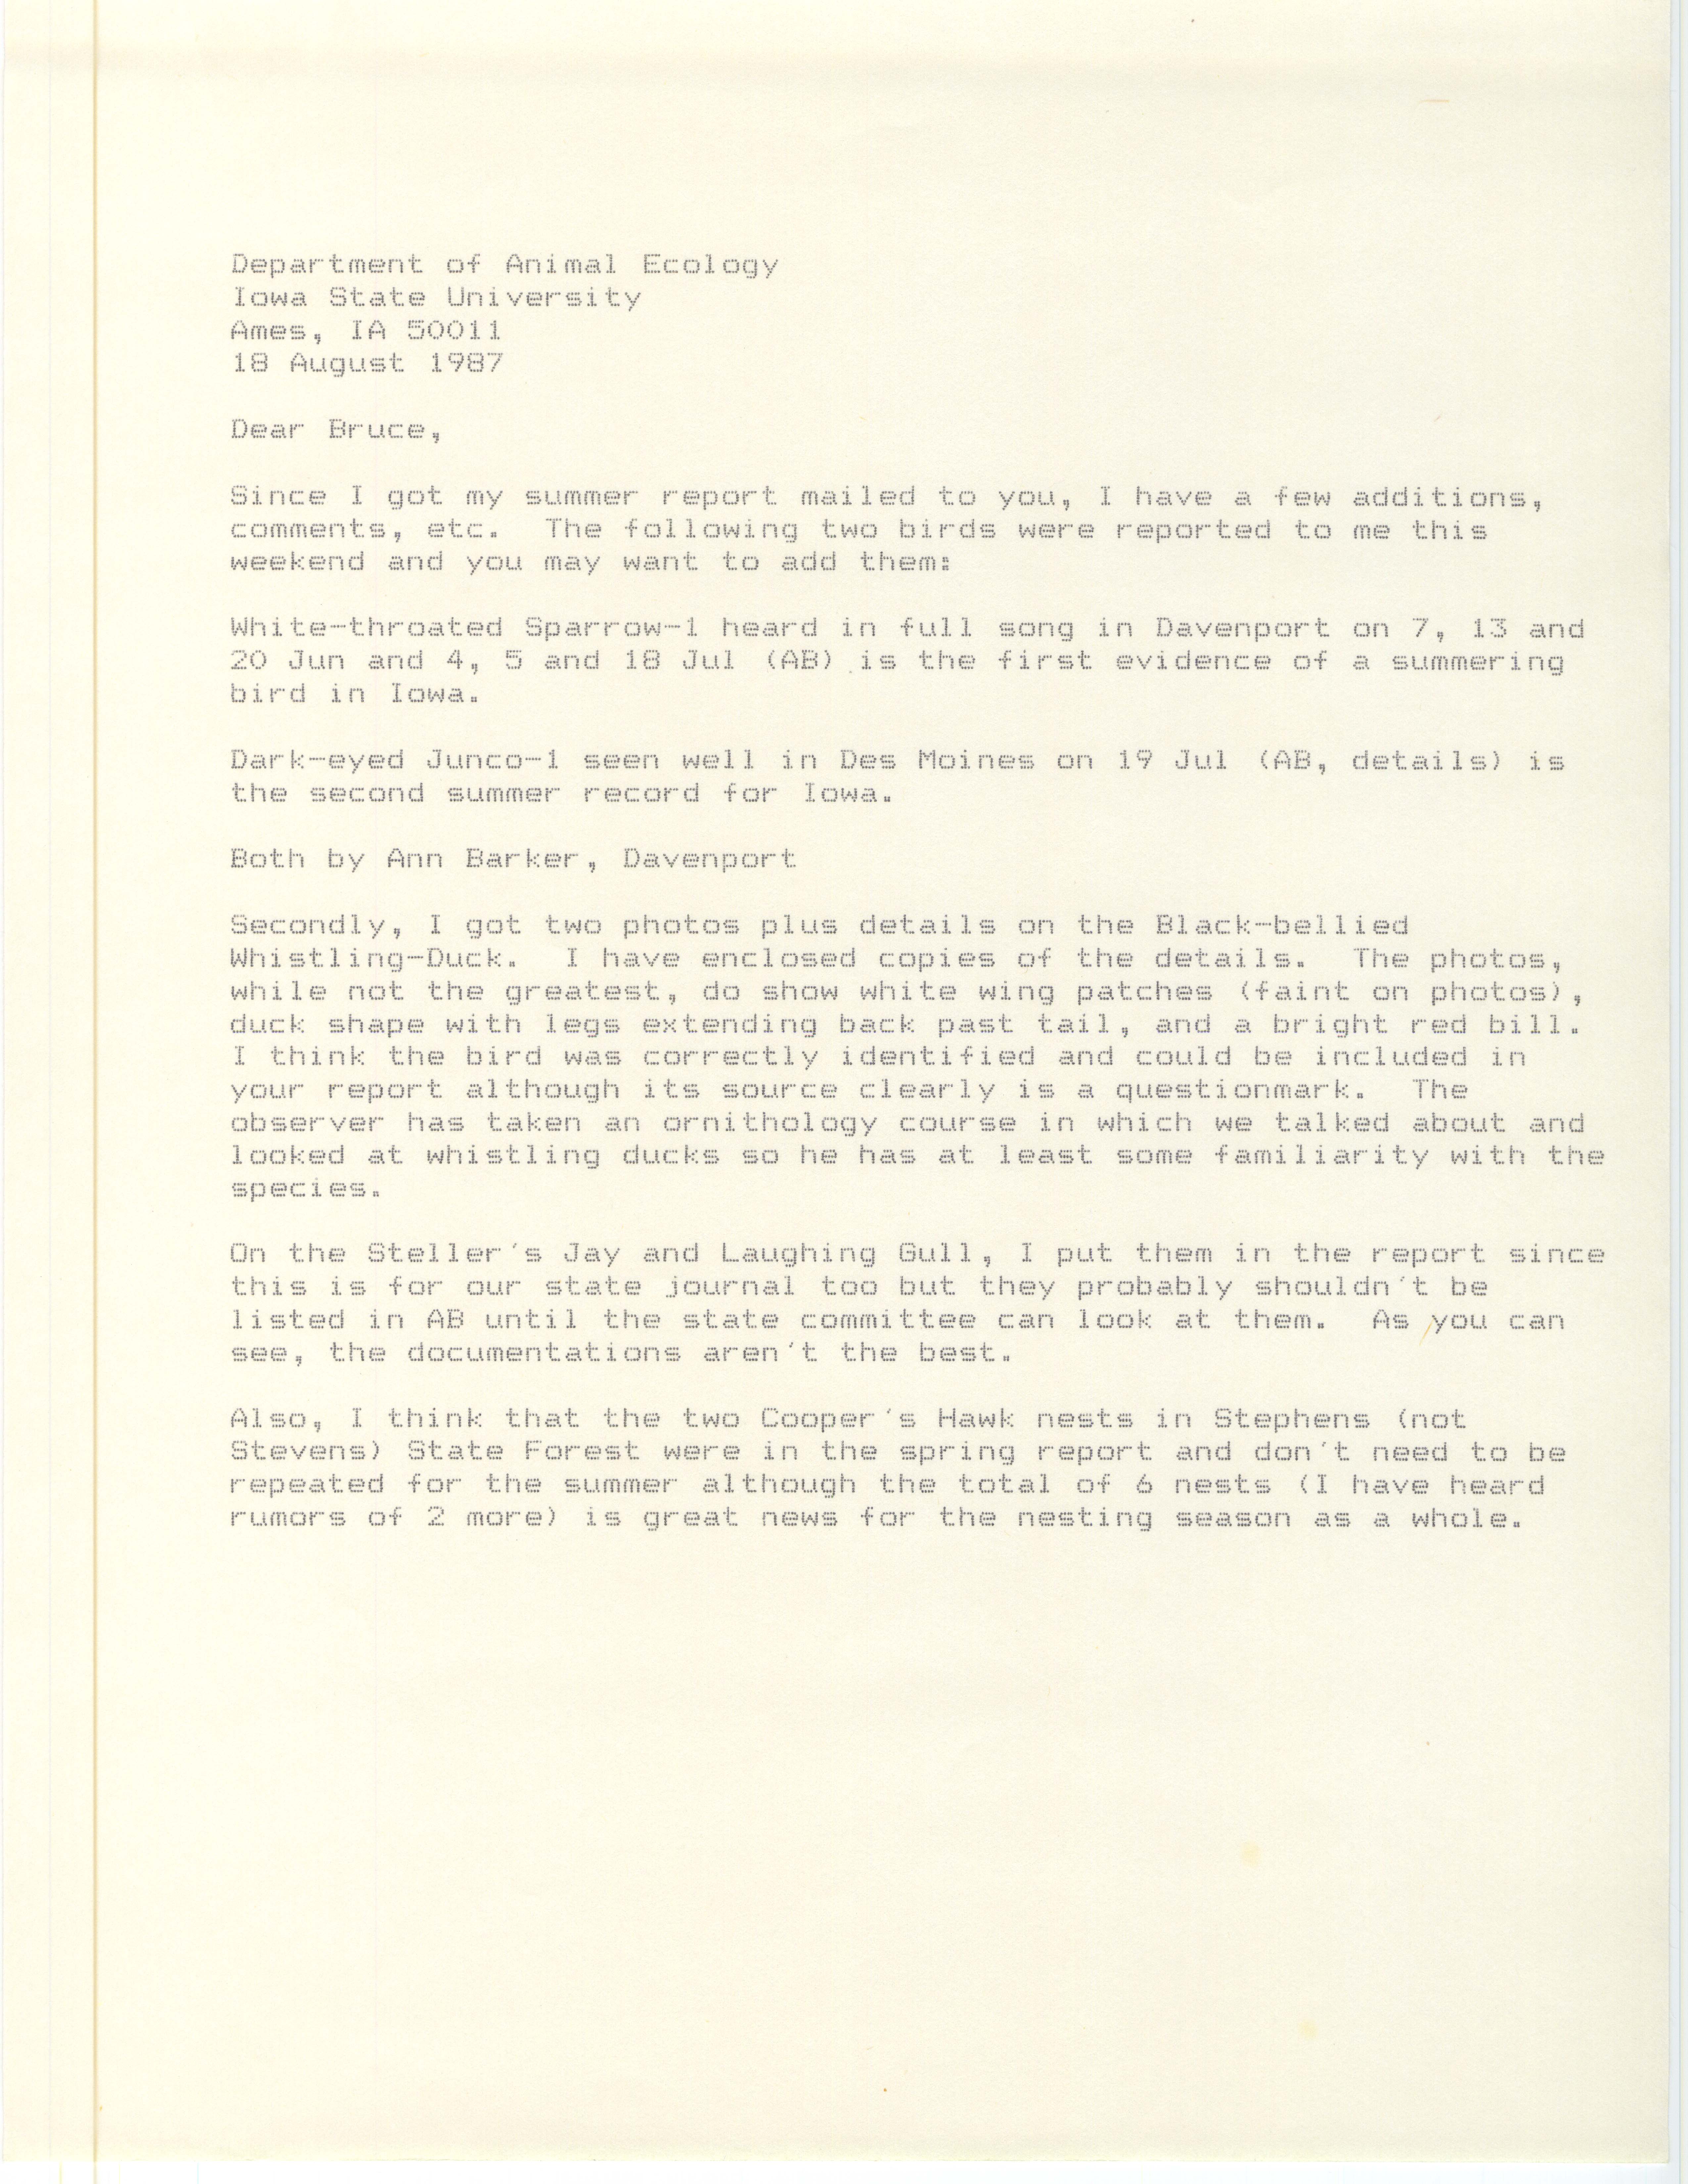 James J. Dinsmore letter to Bruce G. Peterjohn regarding additional summer bird sightings, August 18, 1987